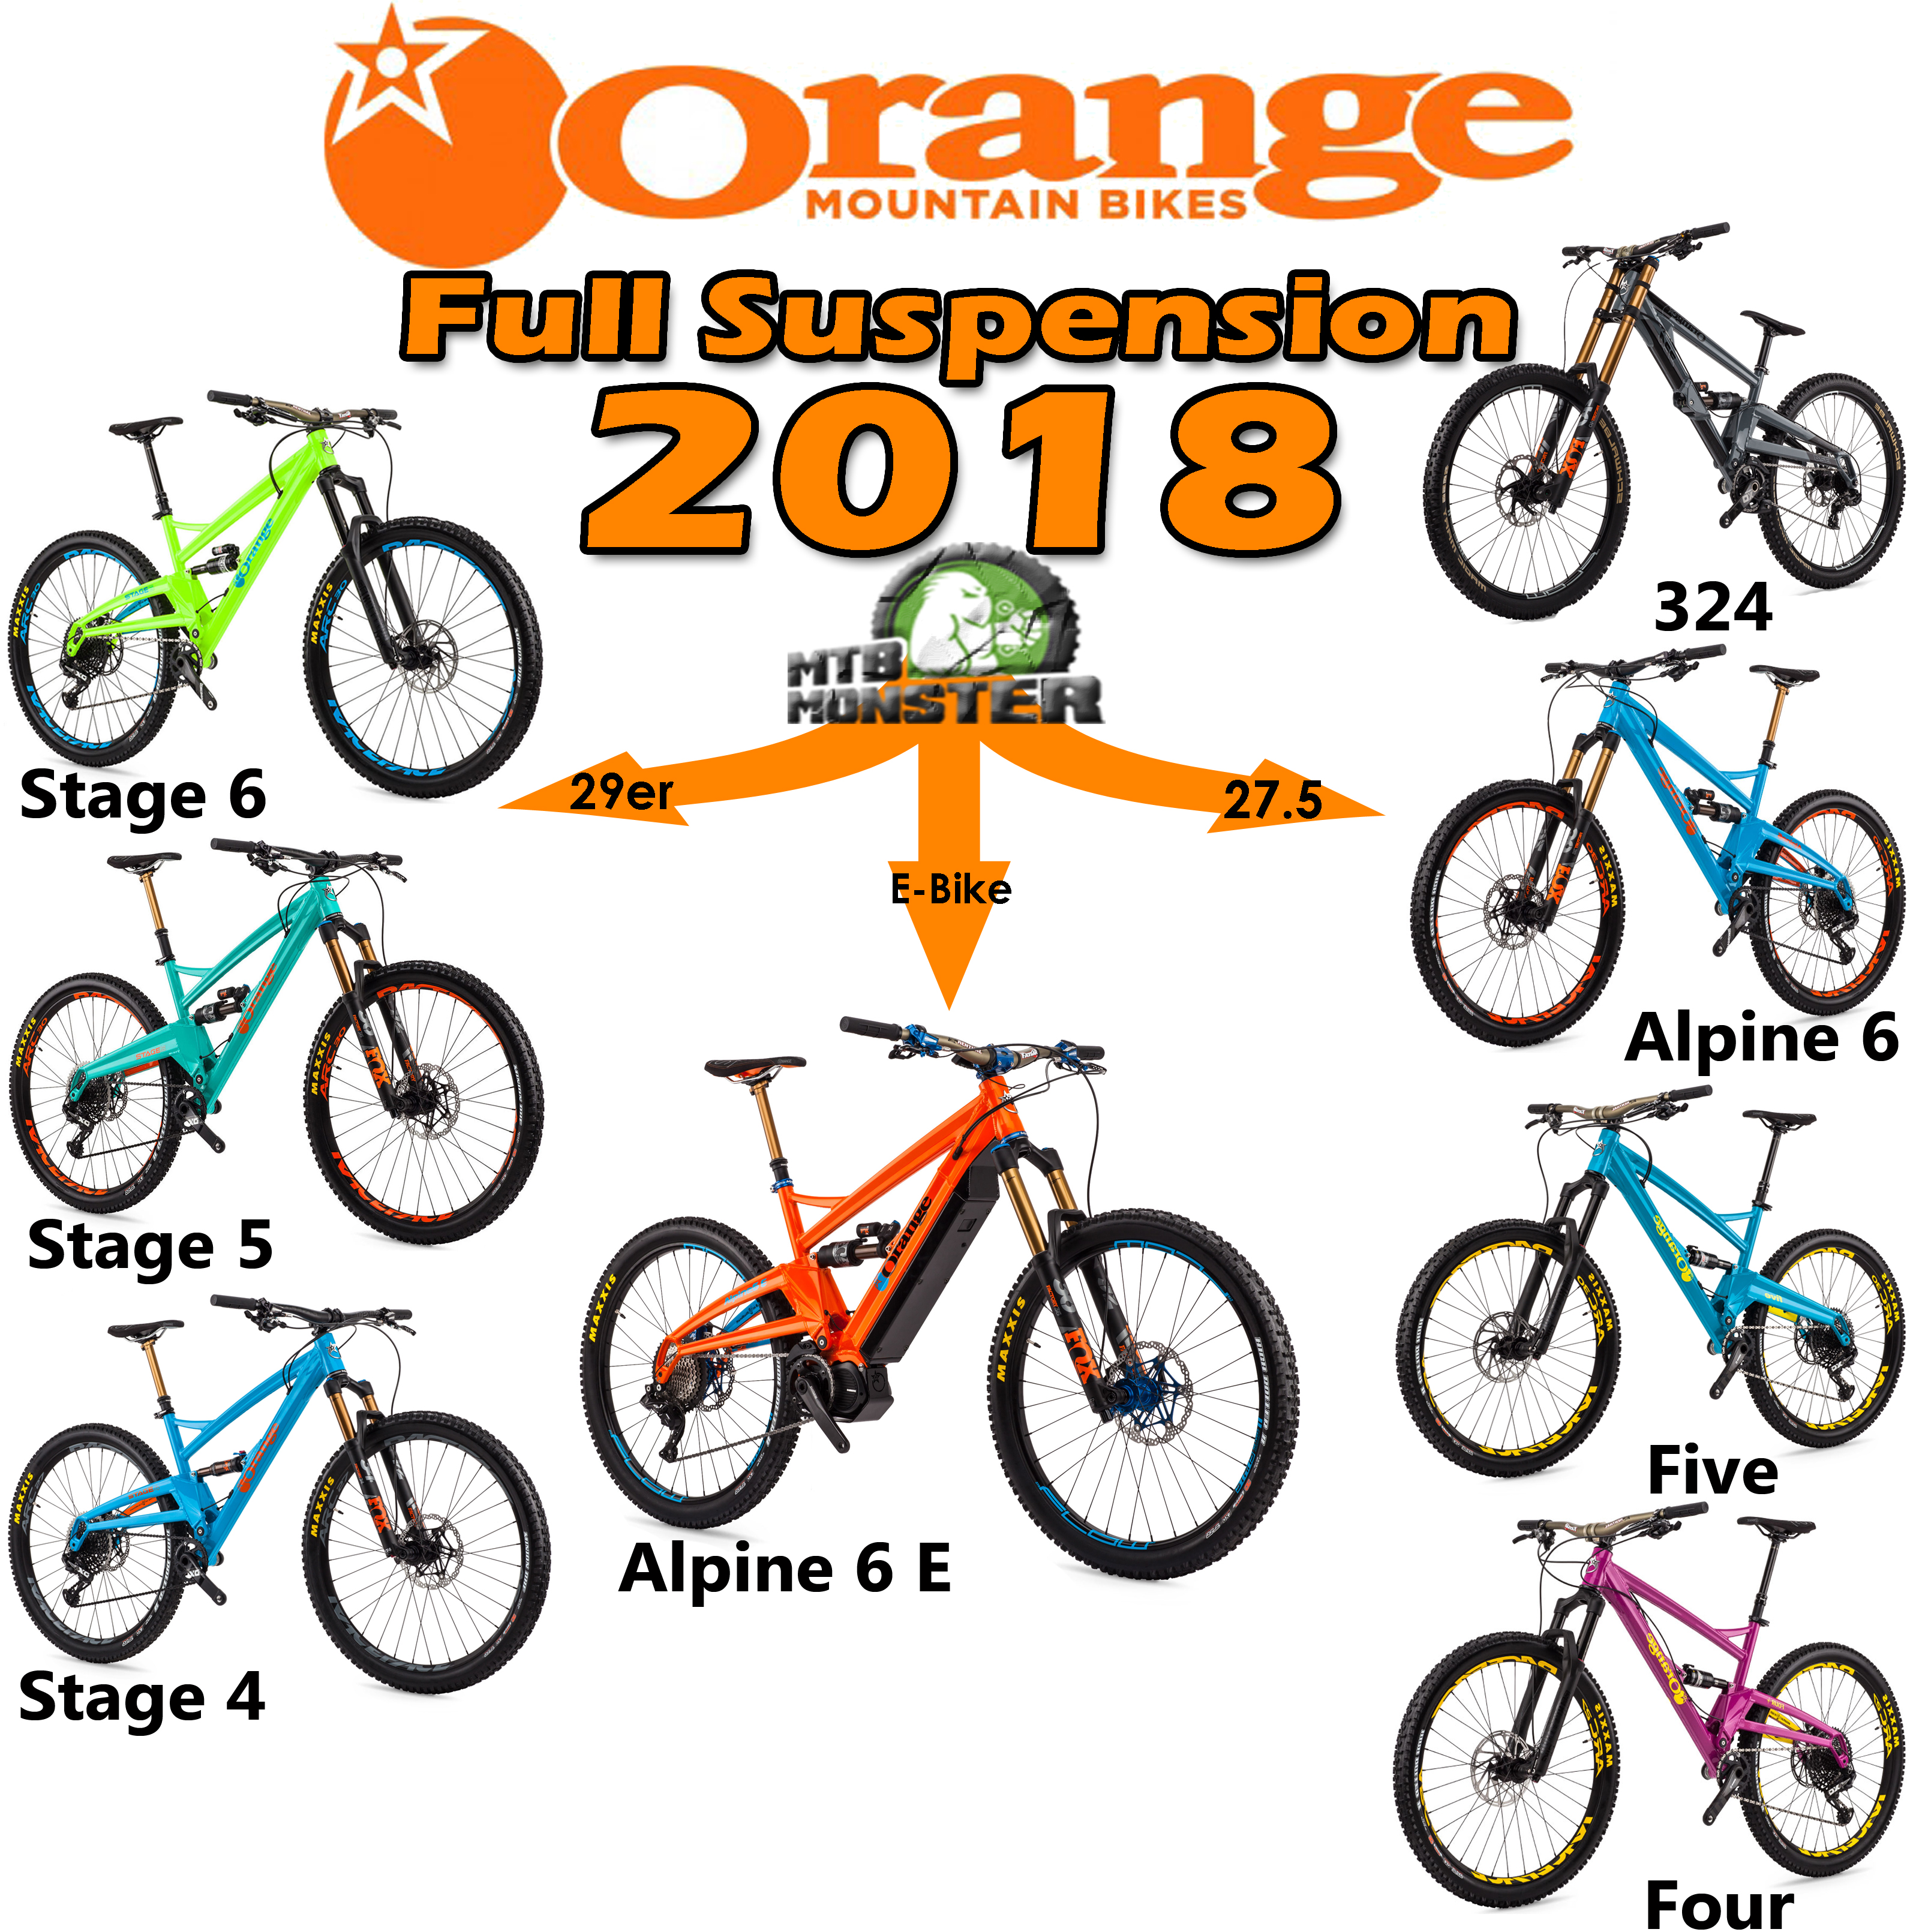 2018 Orange Bikes Full Suspension Range Guide Information Help Guide Stage 6 Stage 5 Stage 4 324 Alpine 6 Five Four 29er 27.5